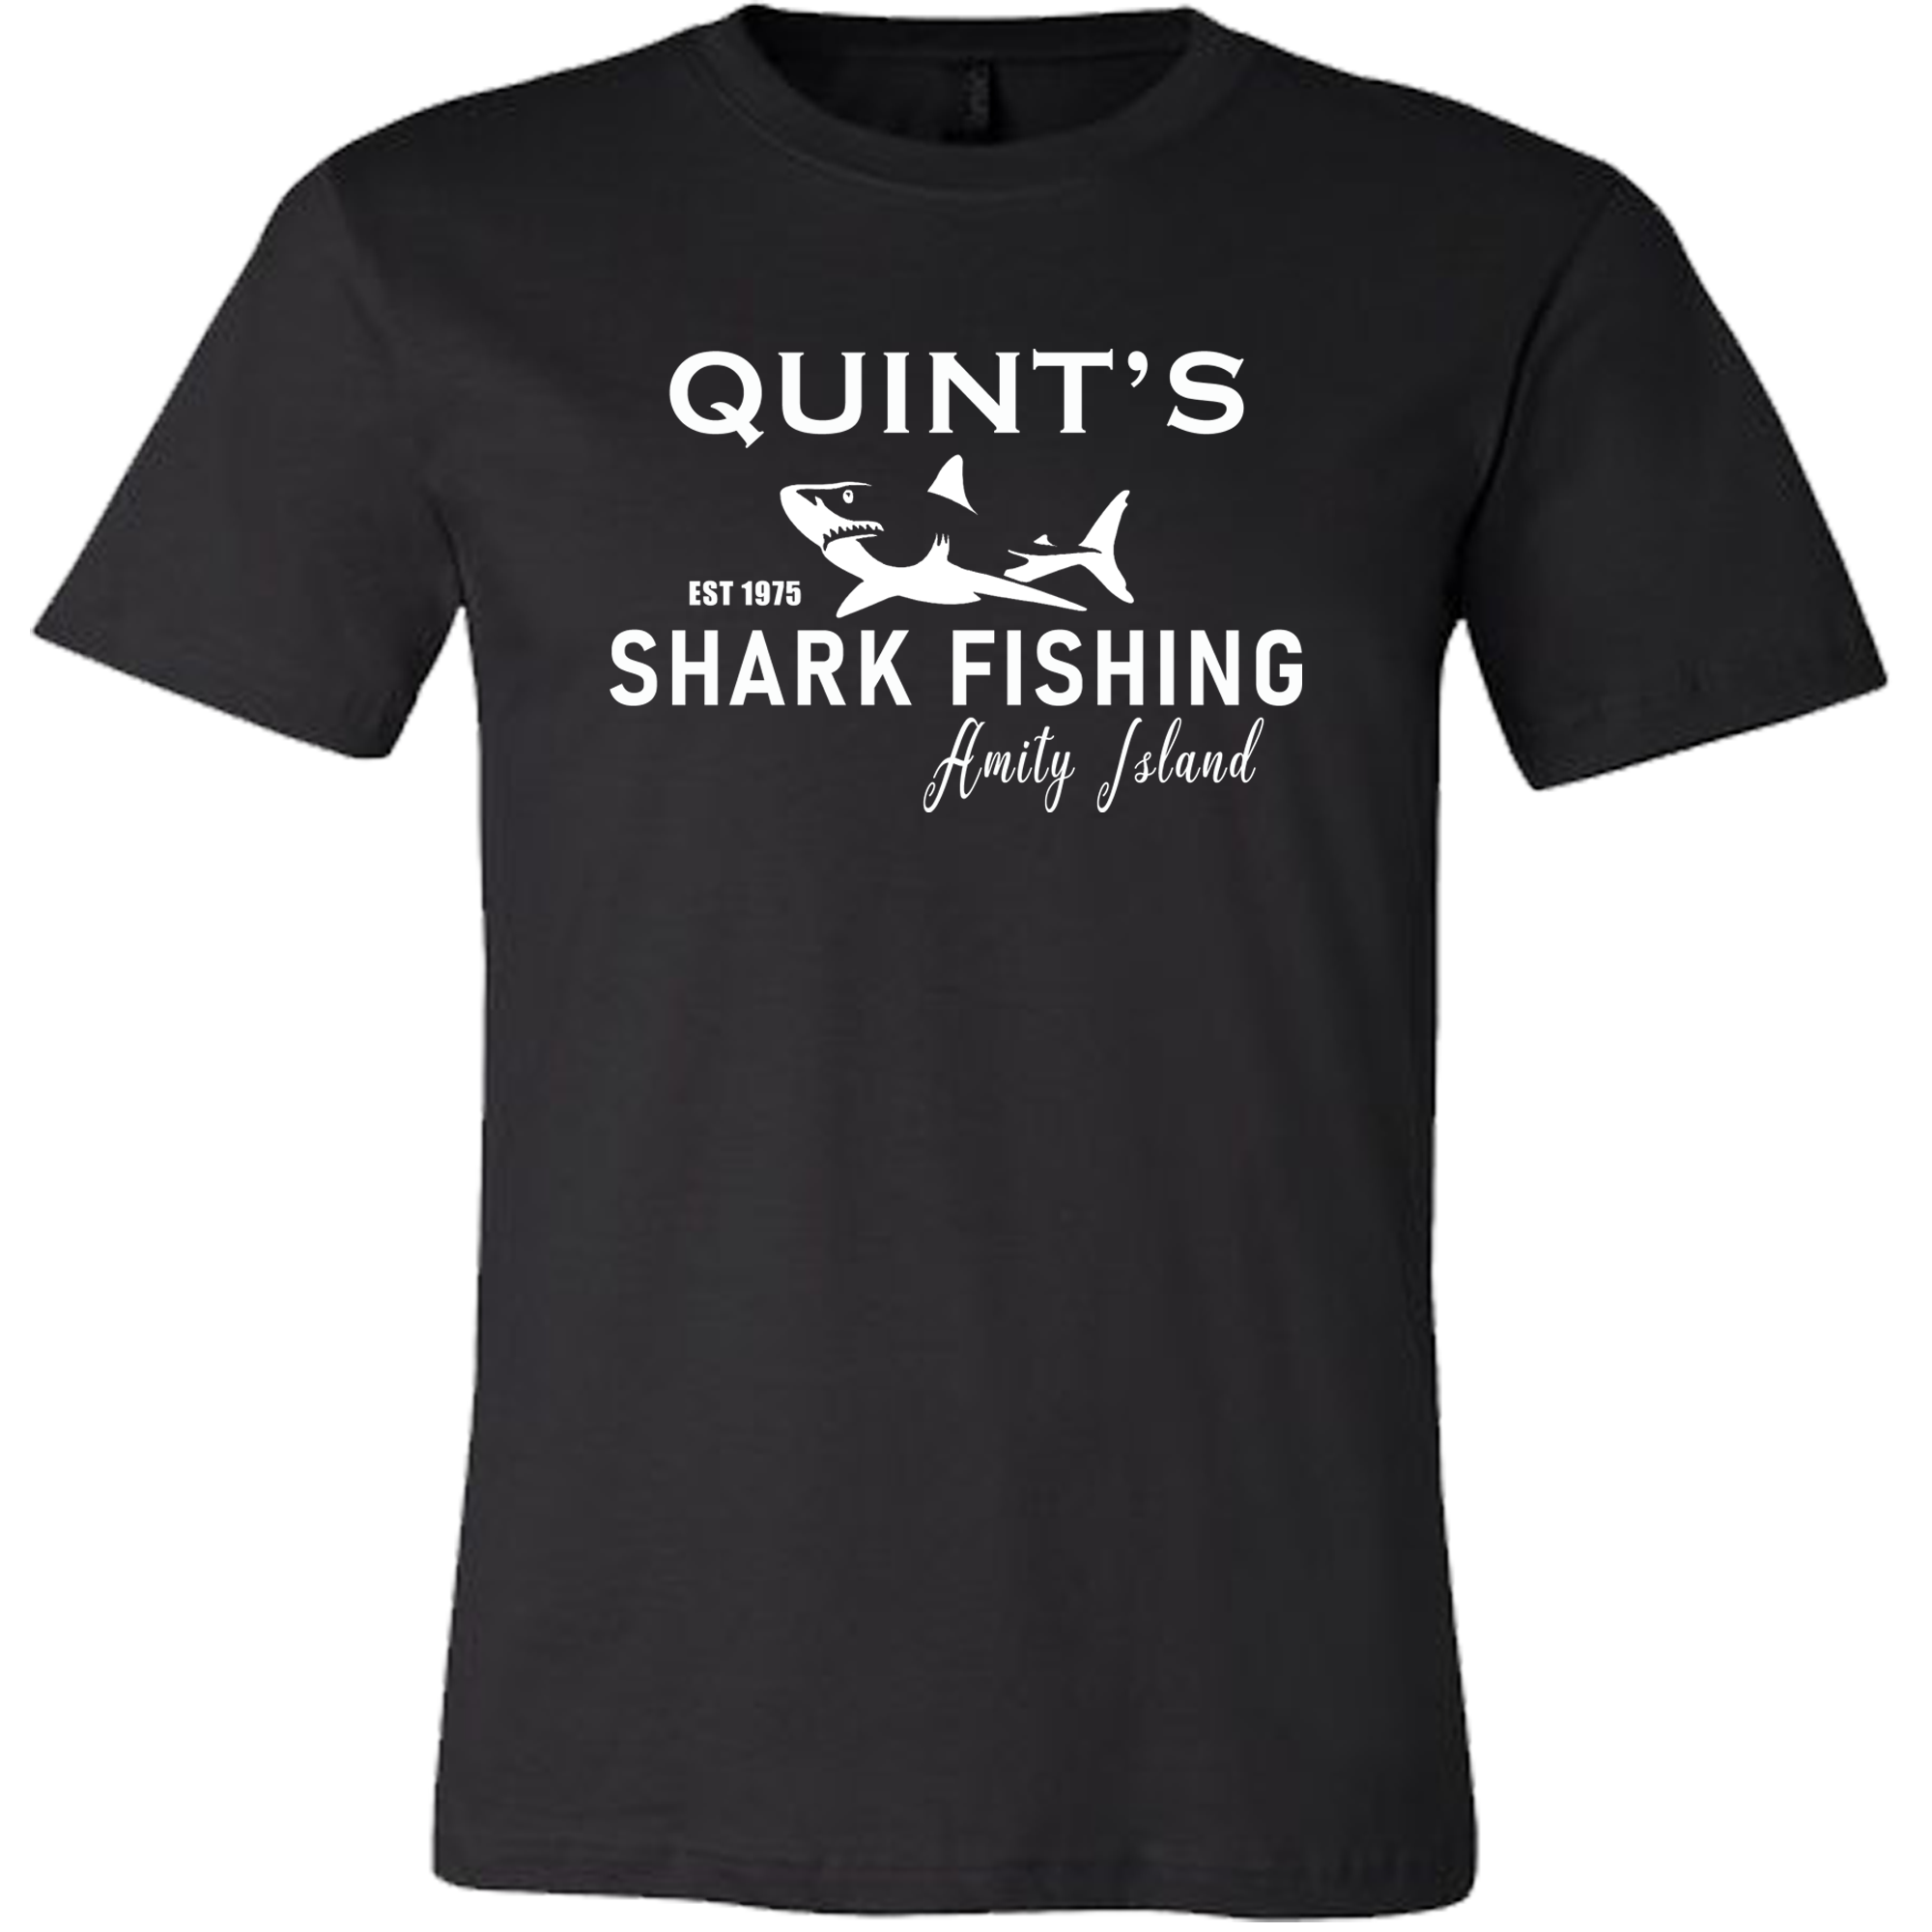 Quint's Shark Fishing Shirt, Quints Shark Fishing T-Shirt, Amity